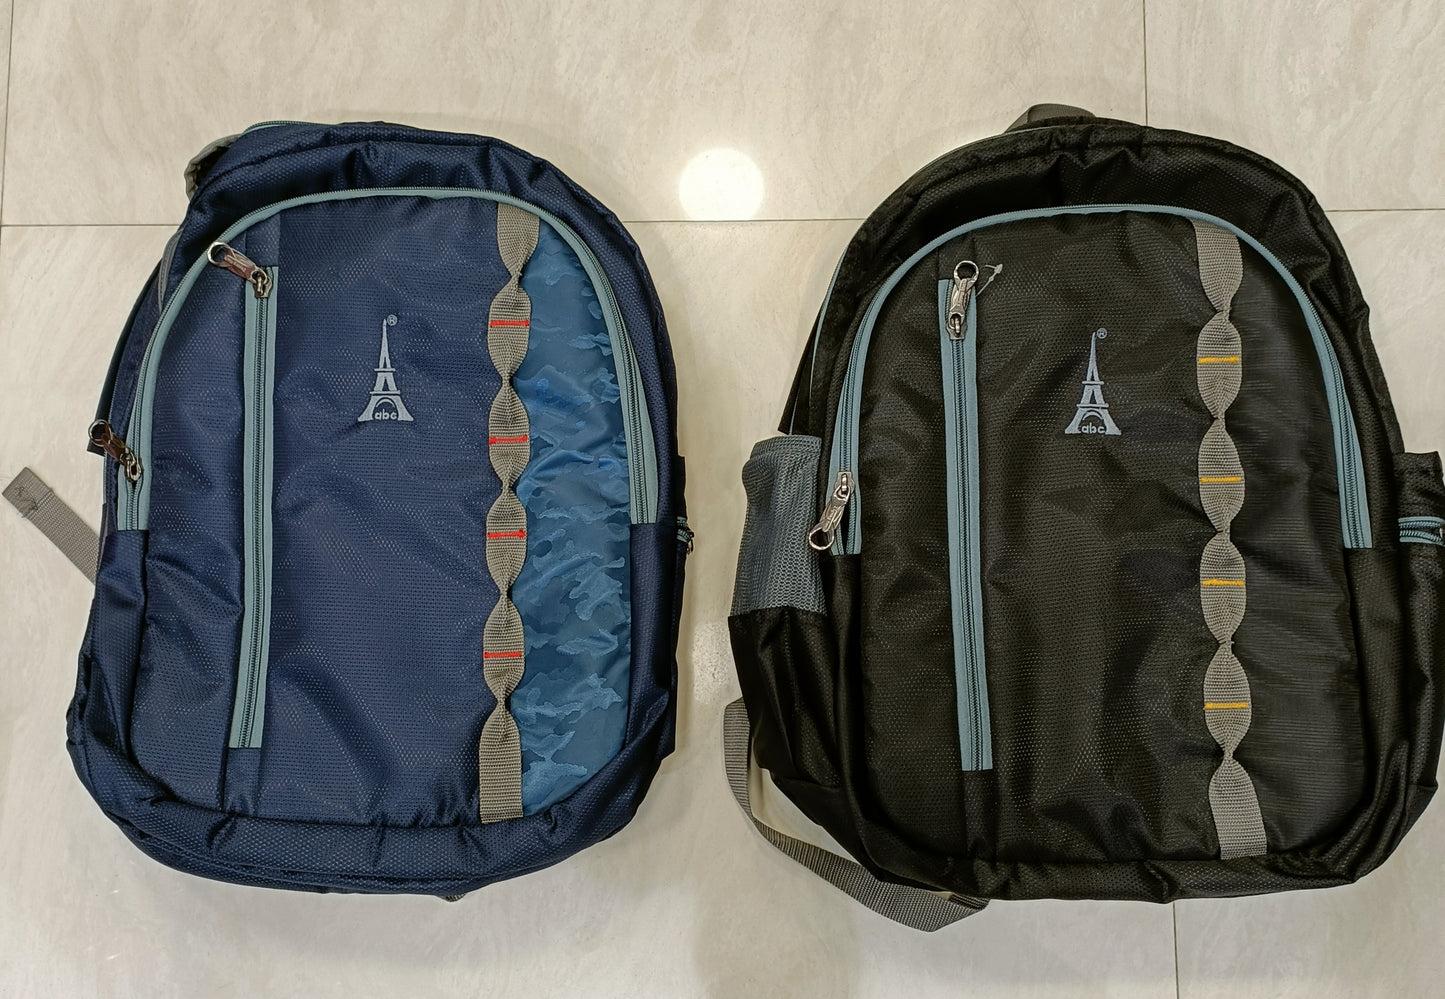 Abc big size school bag , laptop bag heavy duty bag with laptop compartment